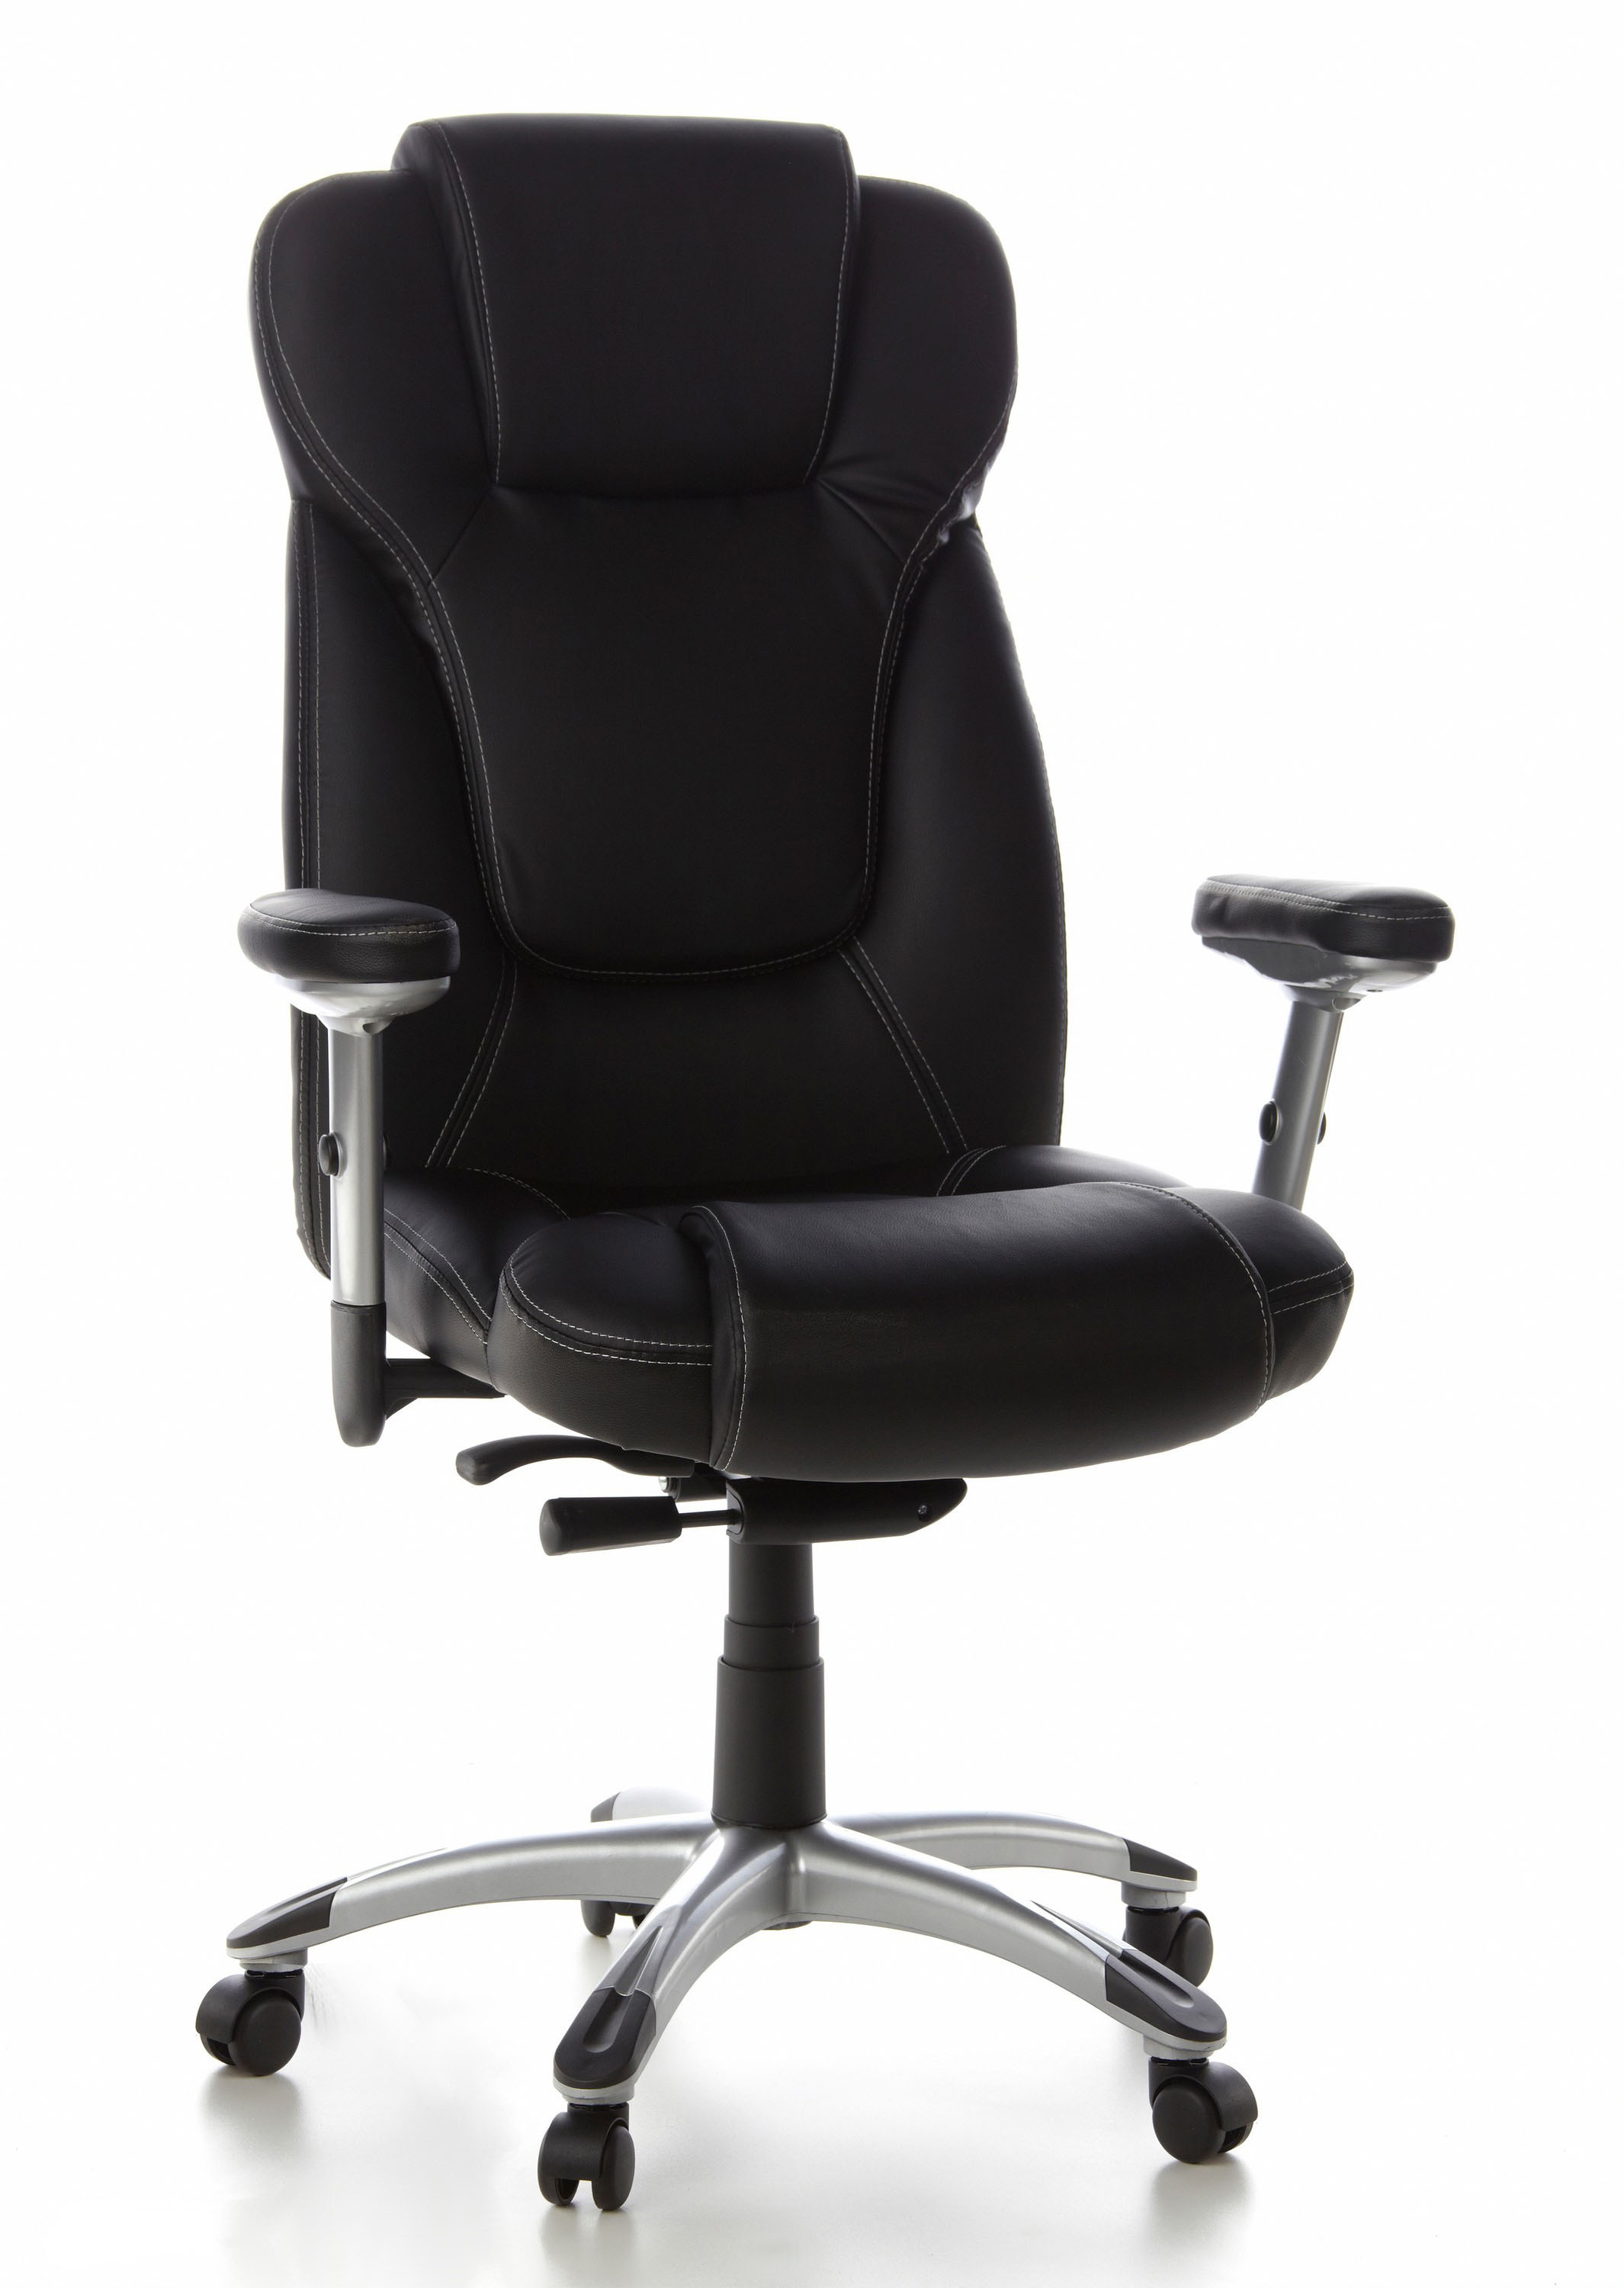 Bürostuhl / Chefsessel, 46-57 cm Sitzhöhe  mit hoher Lehne + Armlehnen, Kunstlederbezug